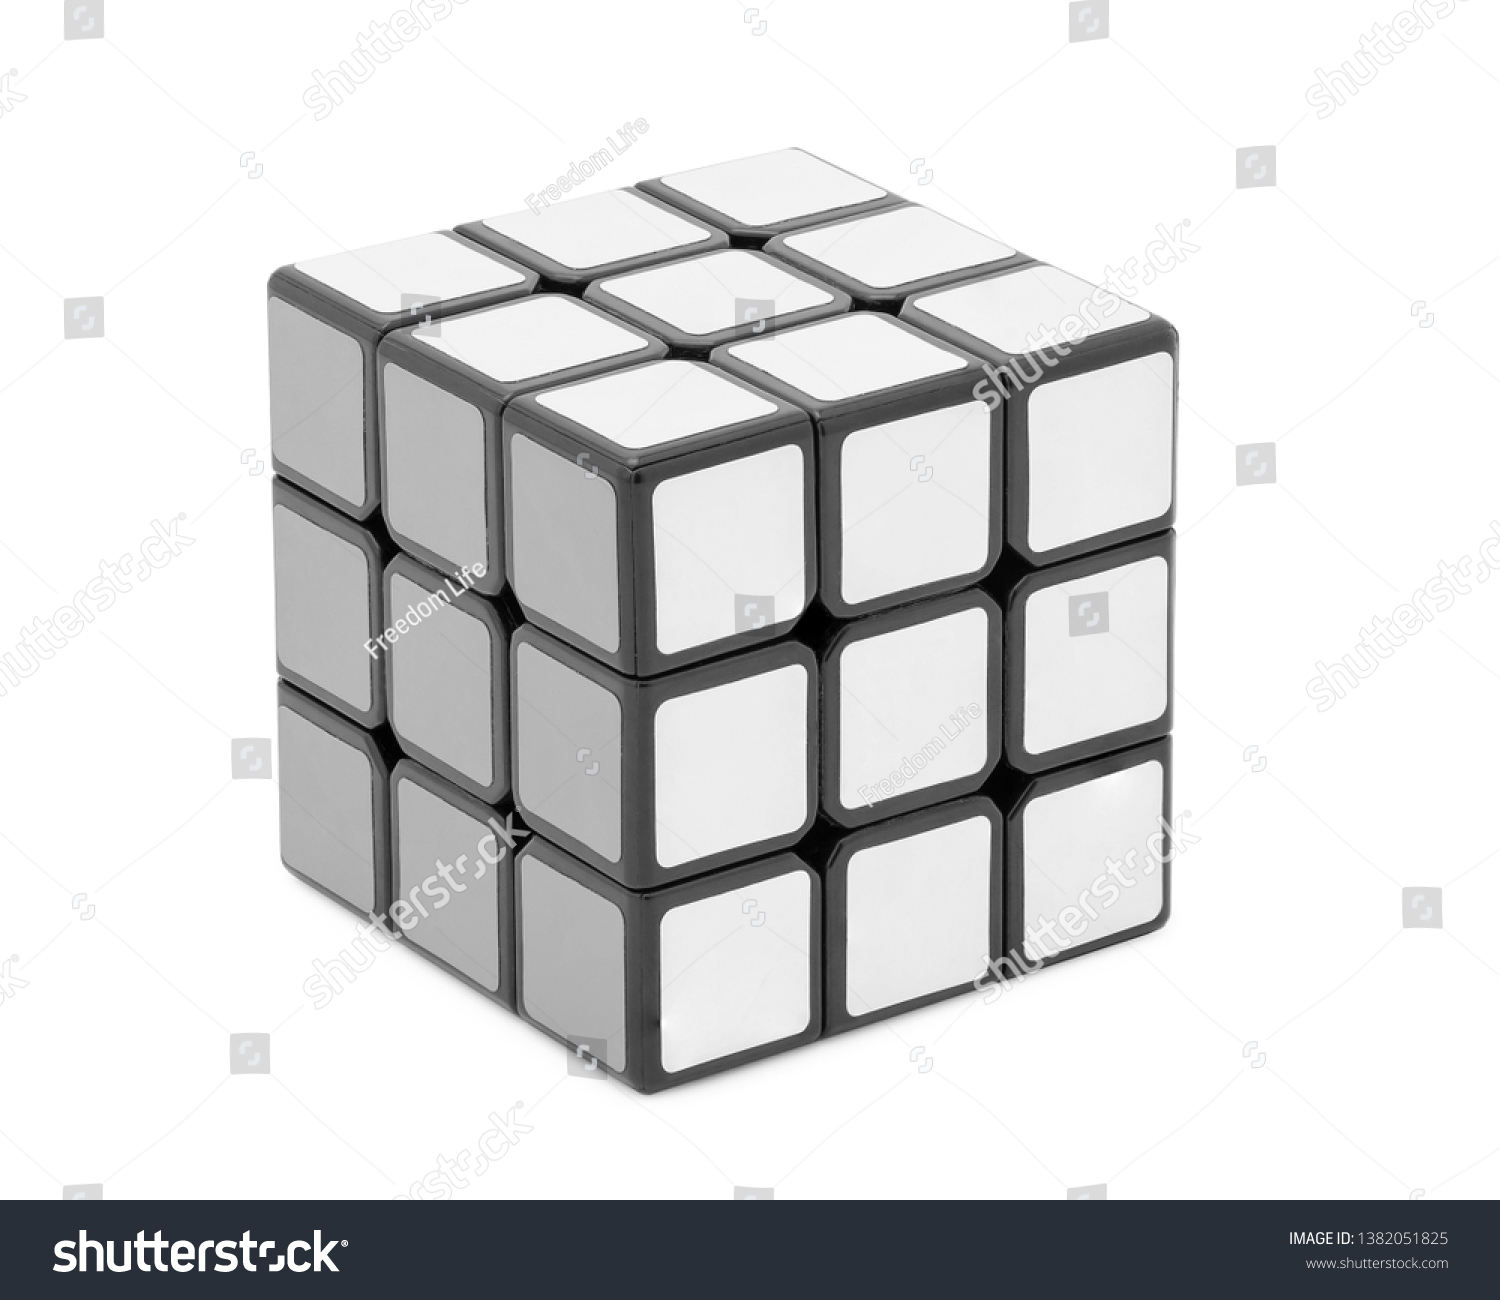 4,837 Rubik cube white background Images, Stock Photos & Vectors ...